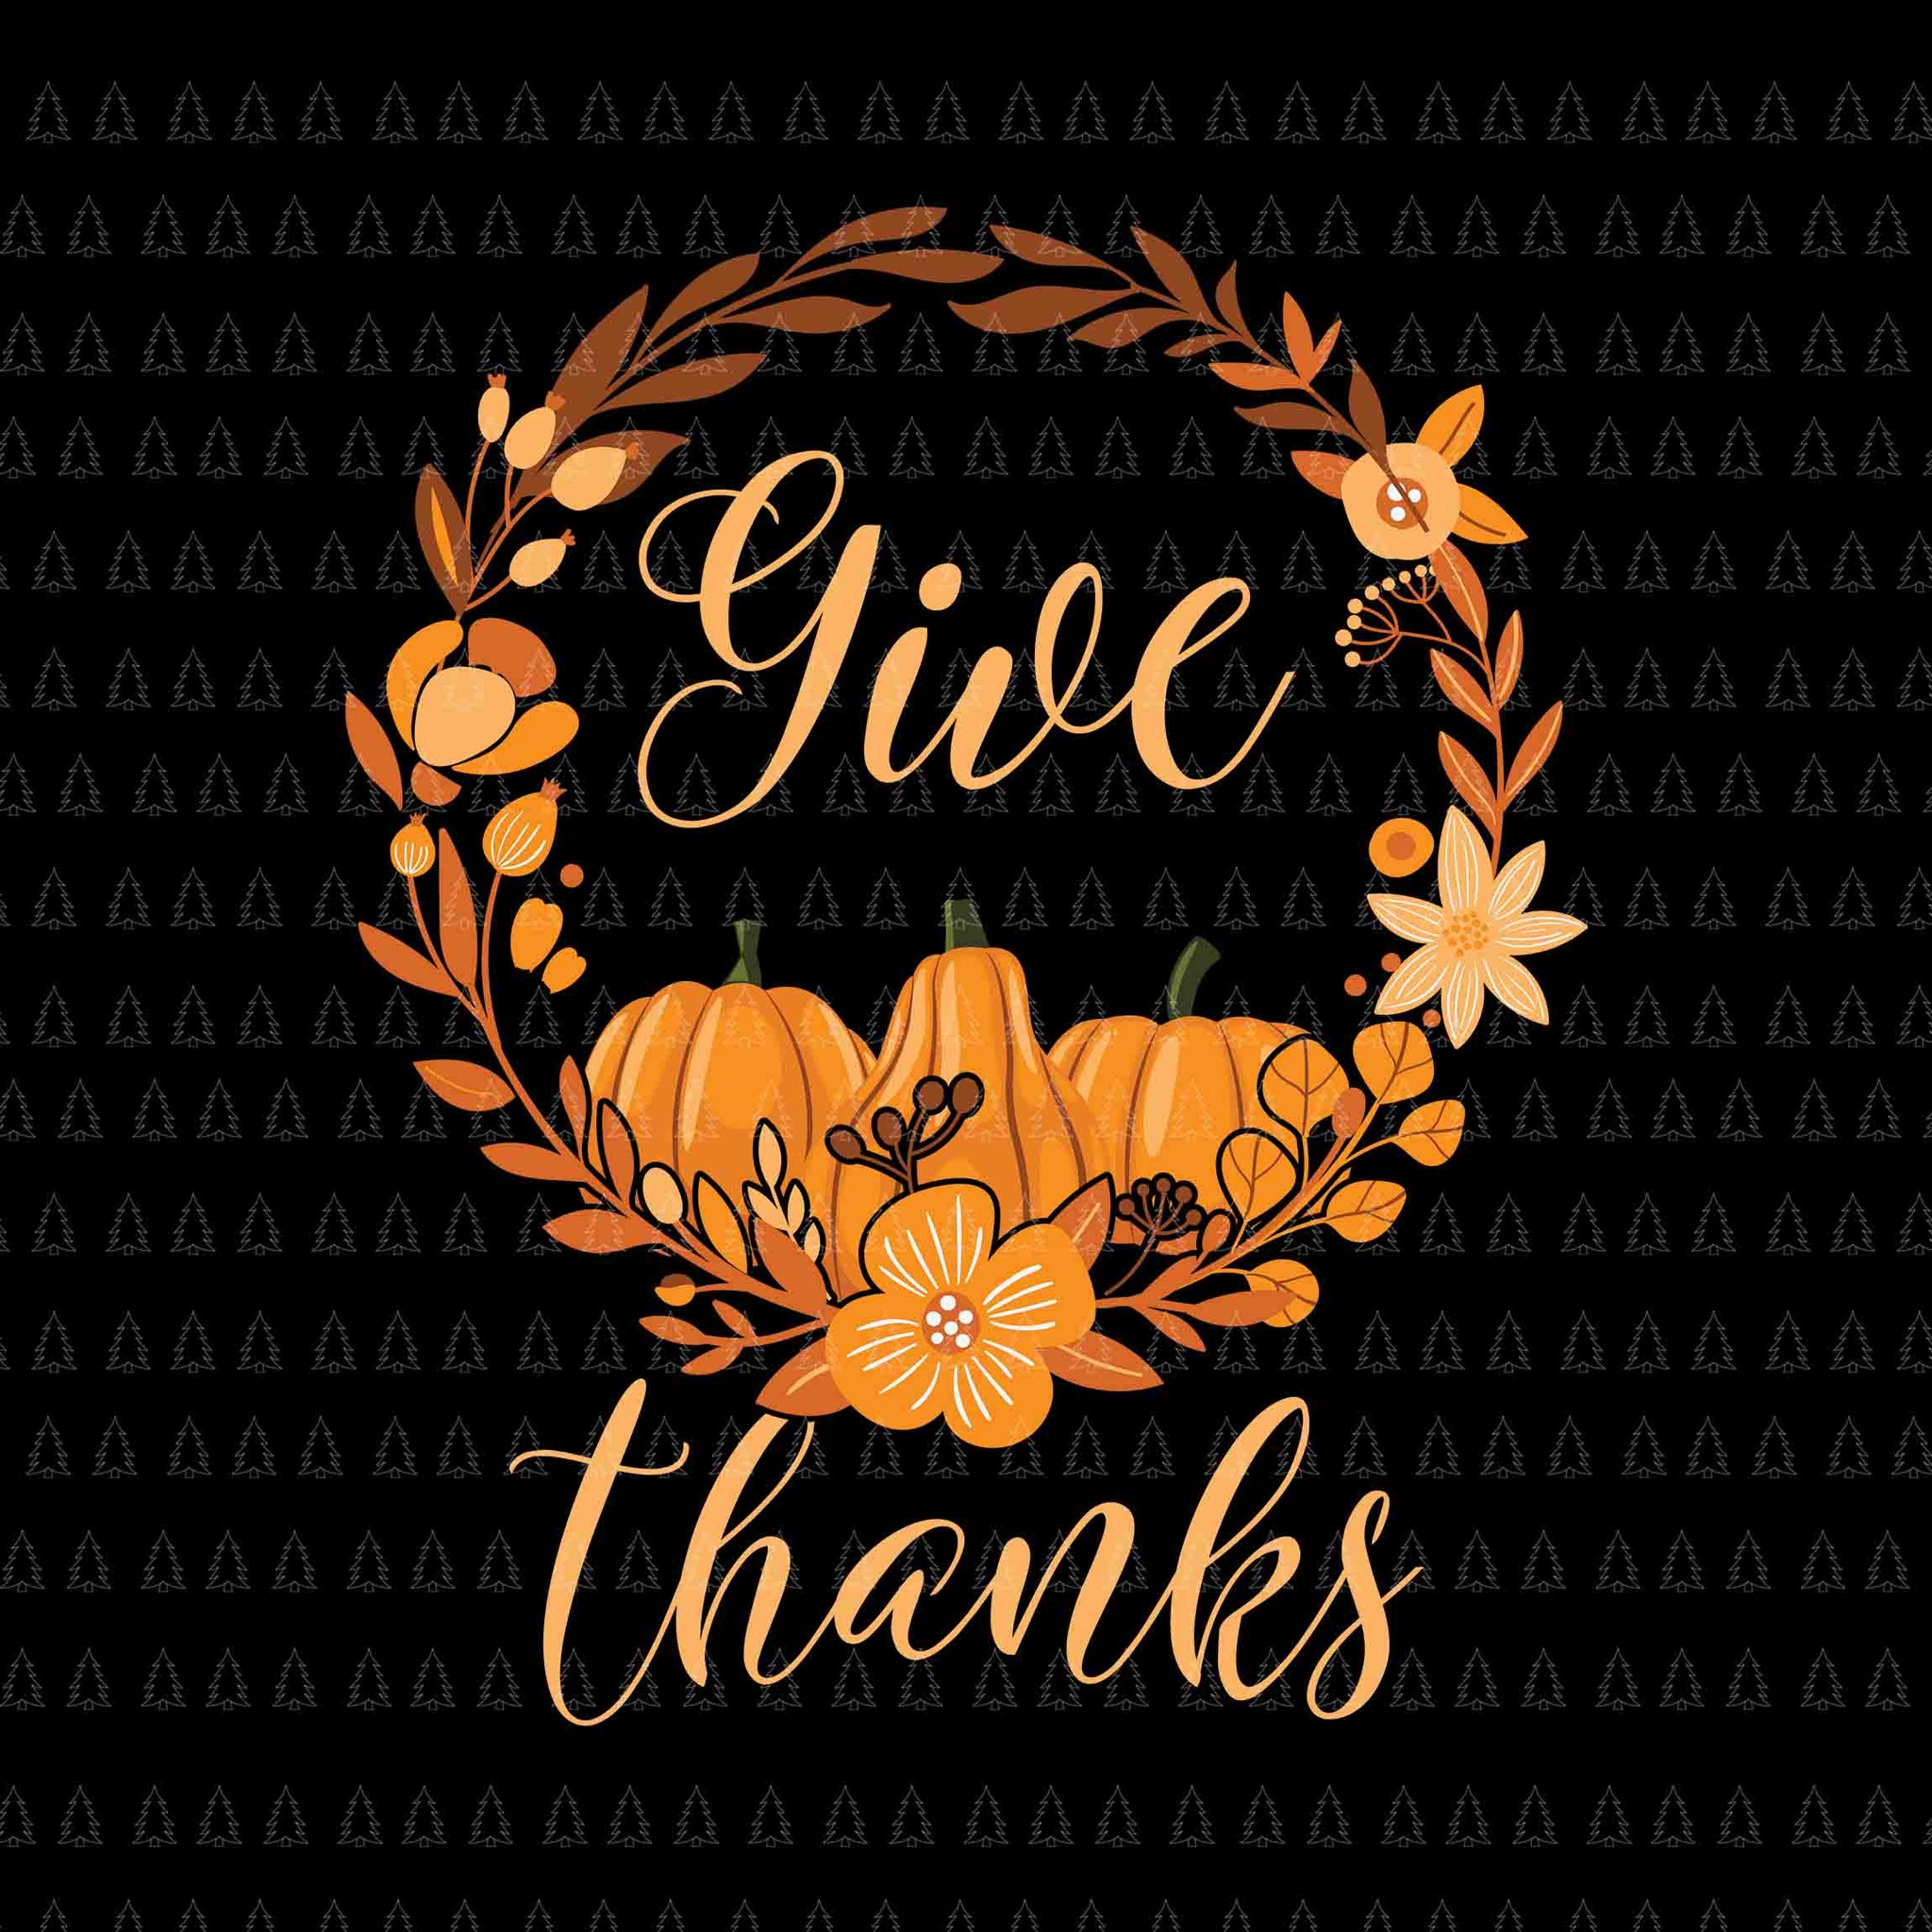 Give Thanks Svg, Happy Thanksgiving Svg, Turkey Svg, Turkey Day Svg, Thanksgiving Svg, Thanksgiving Turkey Svg, Thanksgiving 2021 Svg